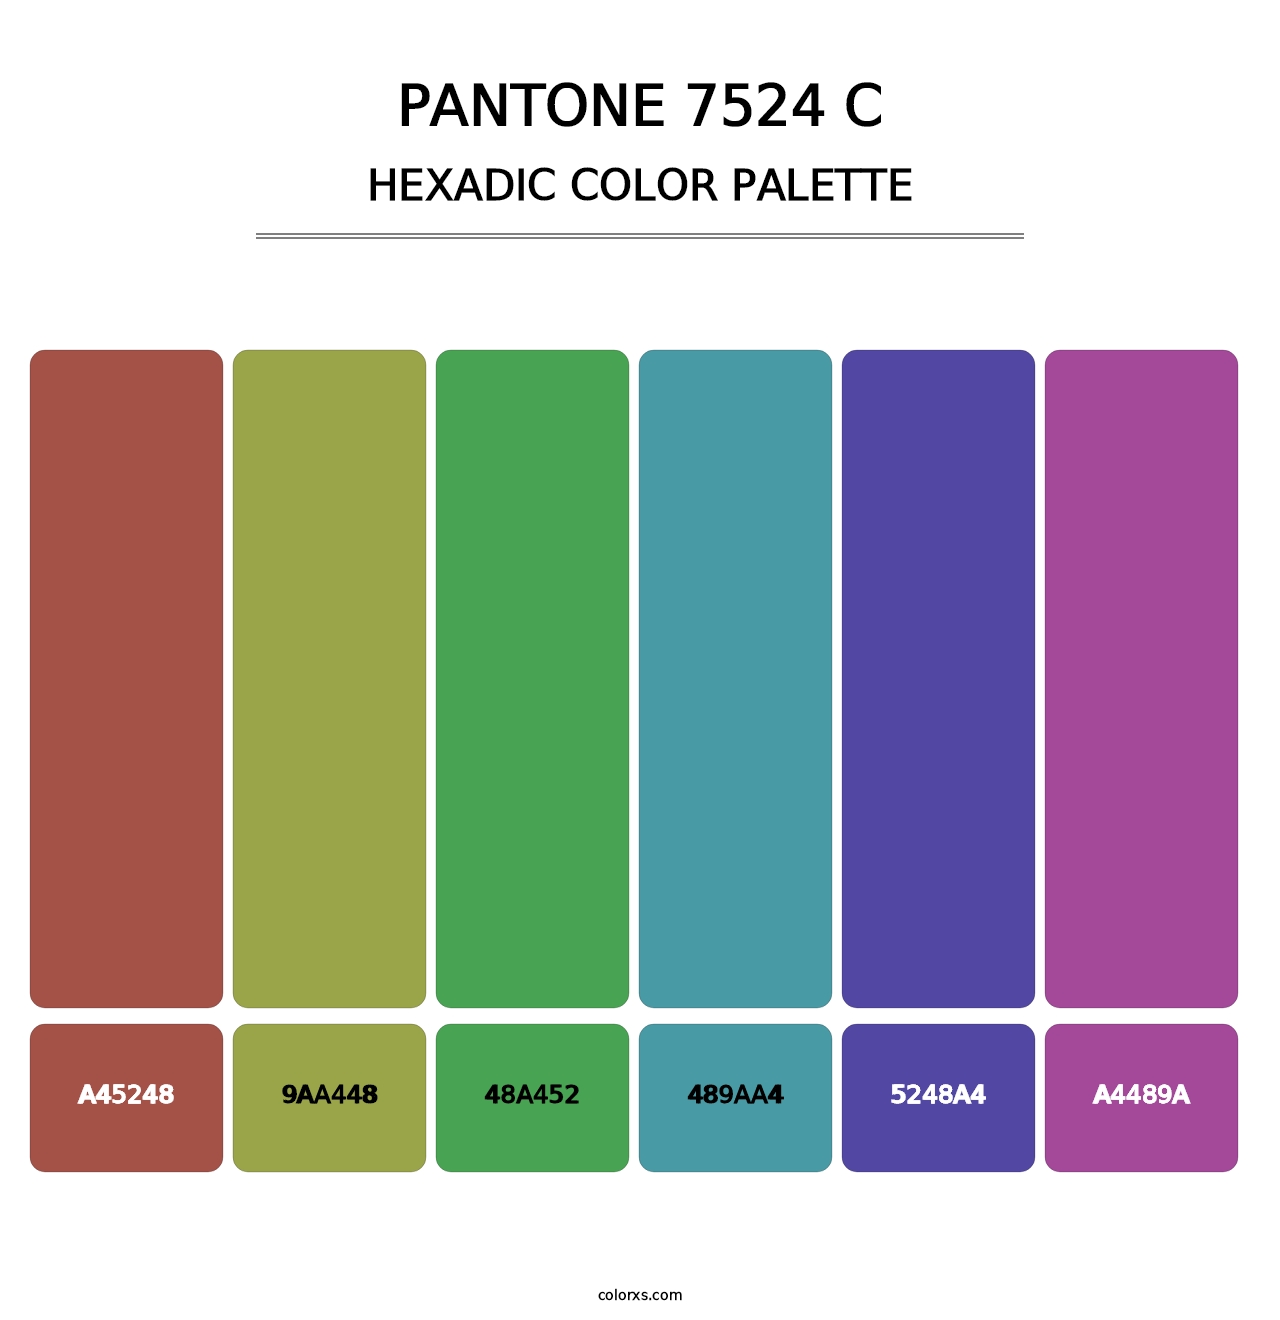 PANTONE 7524 C - Hexadic Color Palette